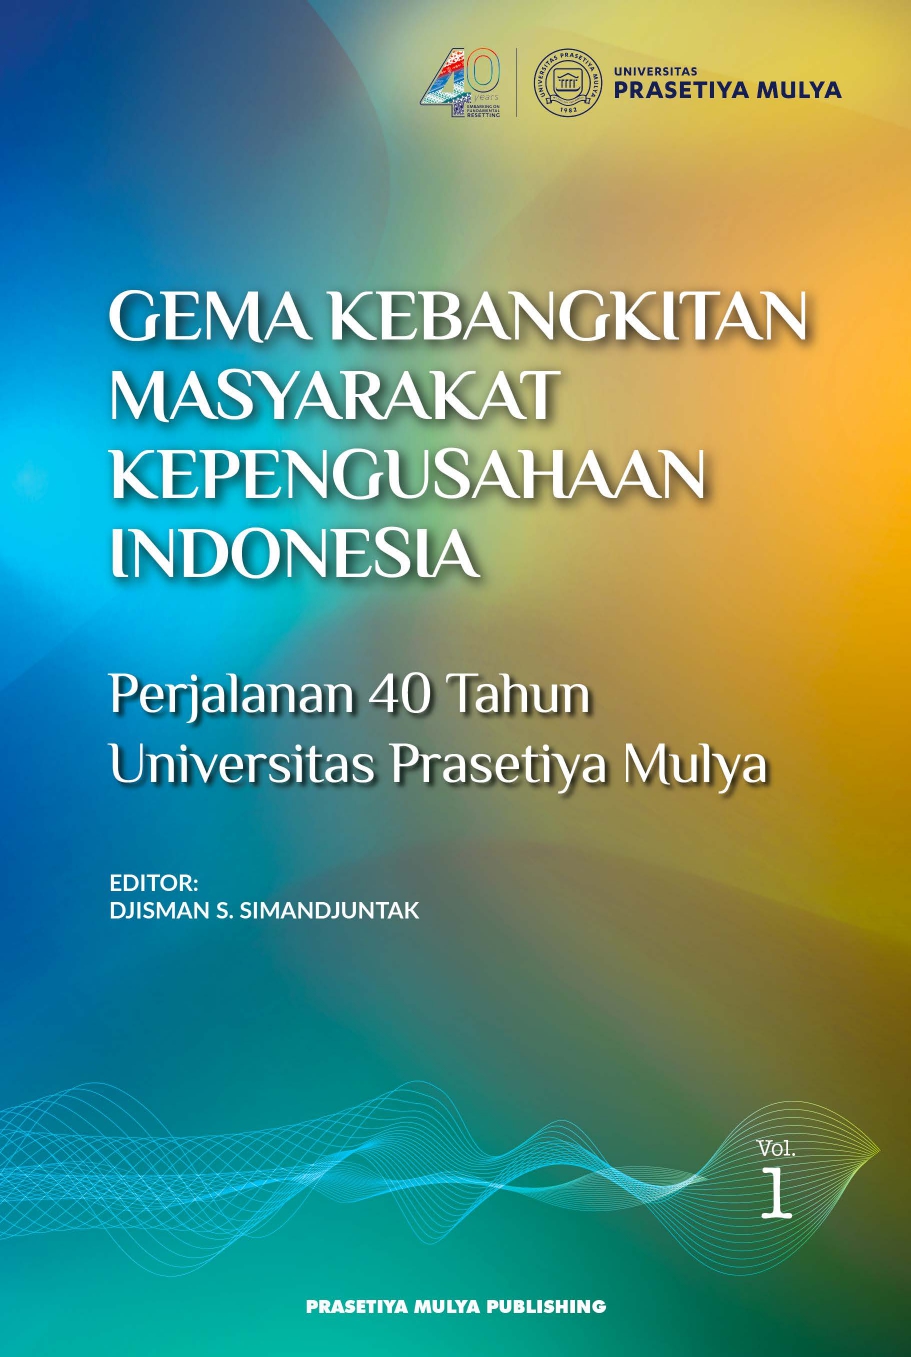 Cover Vol 1. Gema Perjalanan 40 Tahun Universitas Prasetiya Mulya